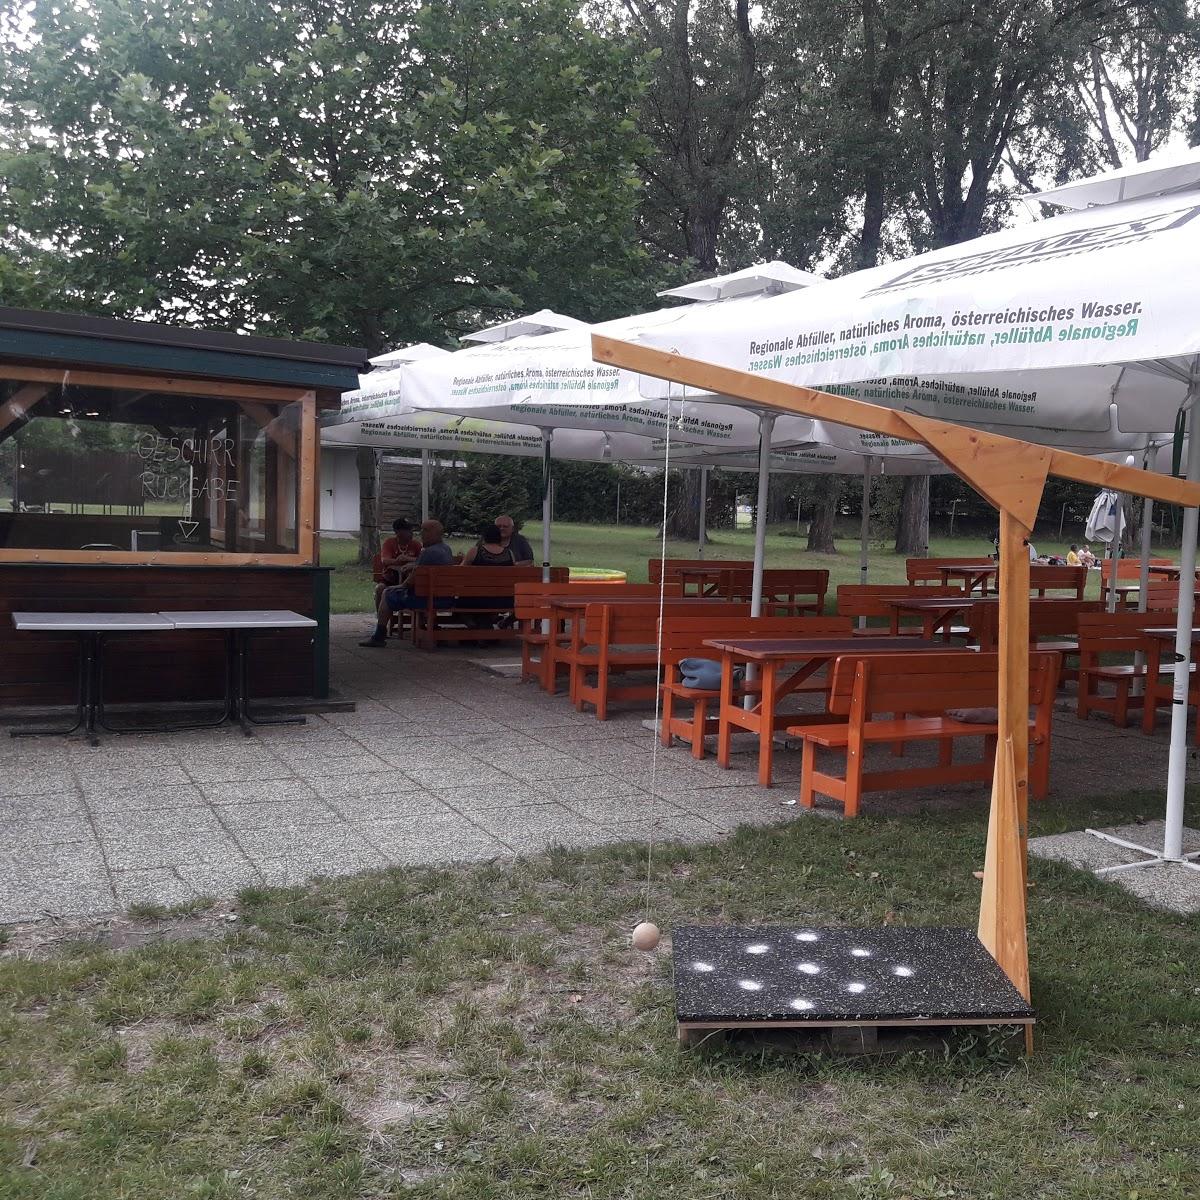 Restaurant "Mauterner Teichbuffet" in Mautern an der Donau